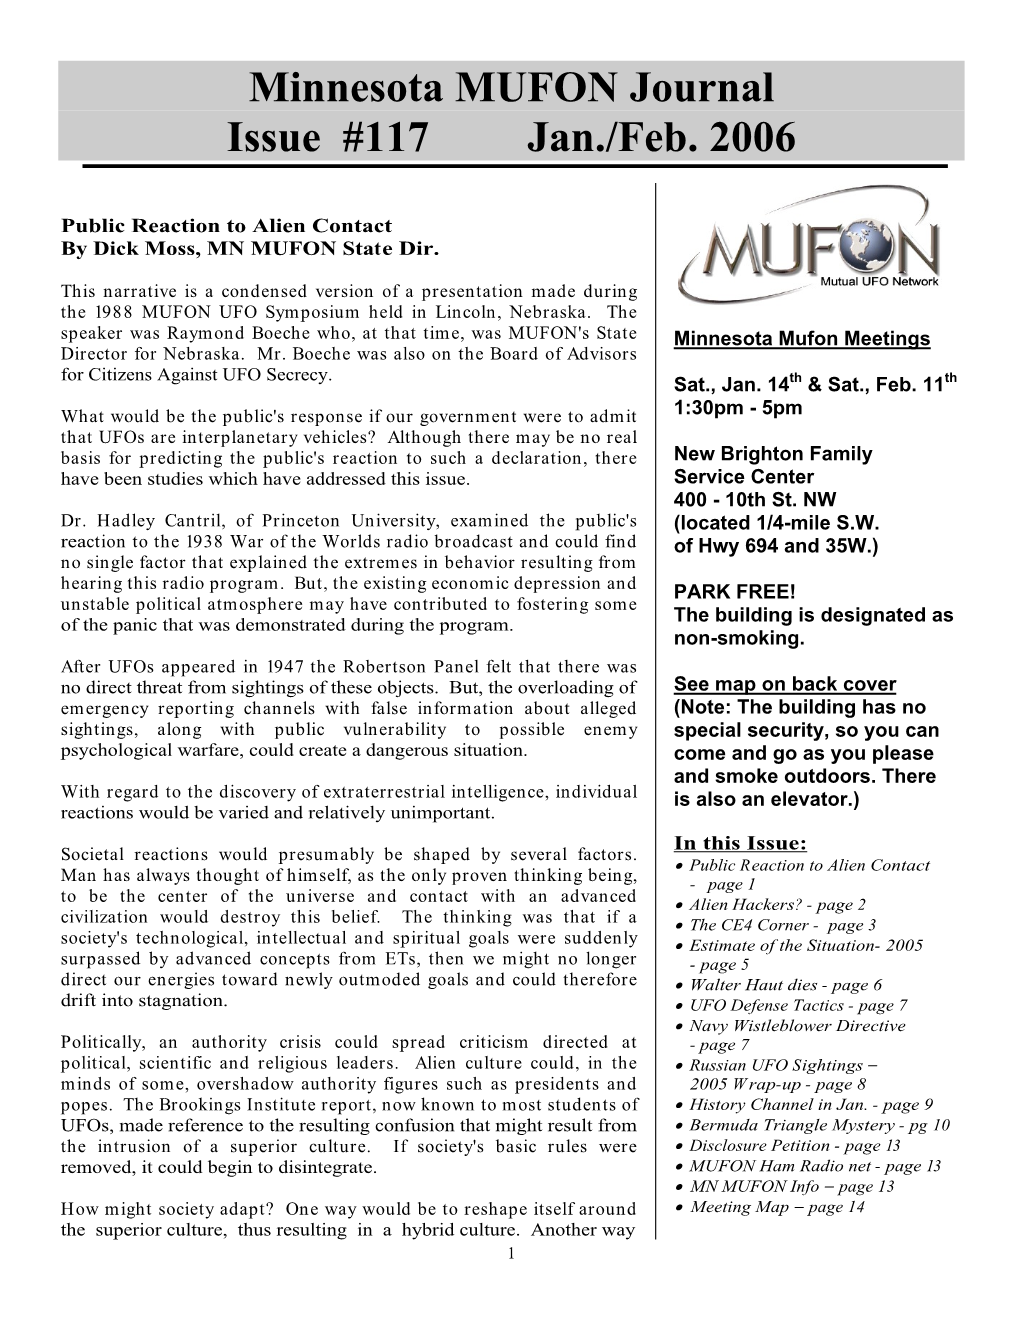 Minnesota MUFON Journal Issue #117 Jan./Feb. 2006